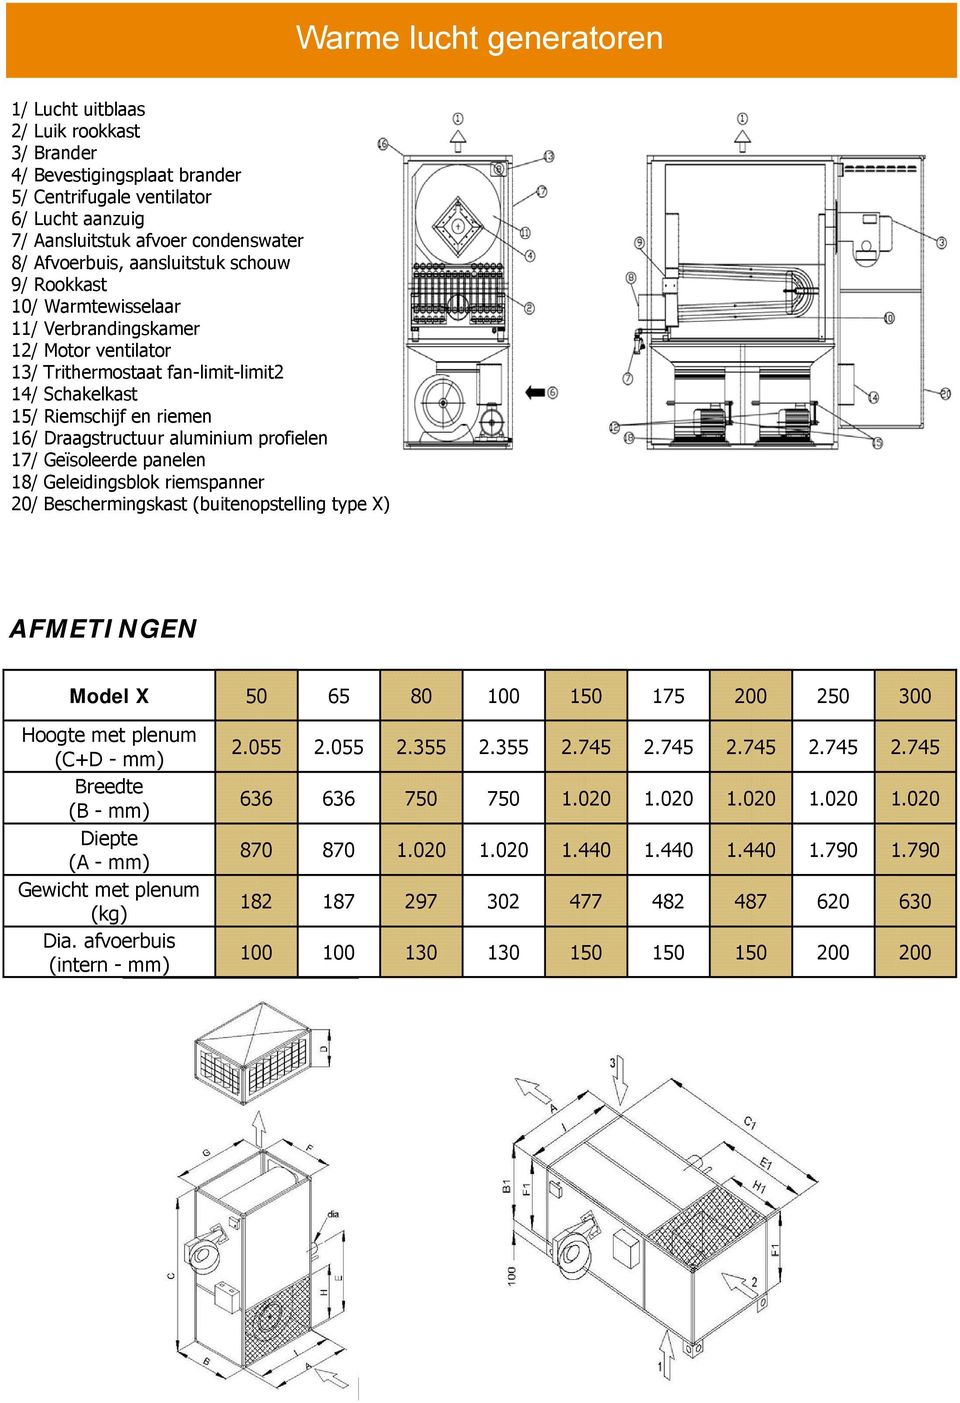 Geïsoleerde panelen 18/ Geleidingsblok riemspanner 20/ Beschermingskast (buitenopstelling type X) AFMETINGEN Model X 50 65 80 100 150 175 200 250 300 Hoogte met plenum (C+D - mm) Breedte (B - mm)